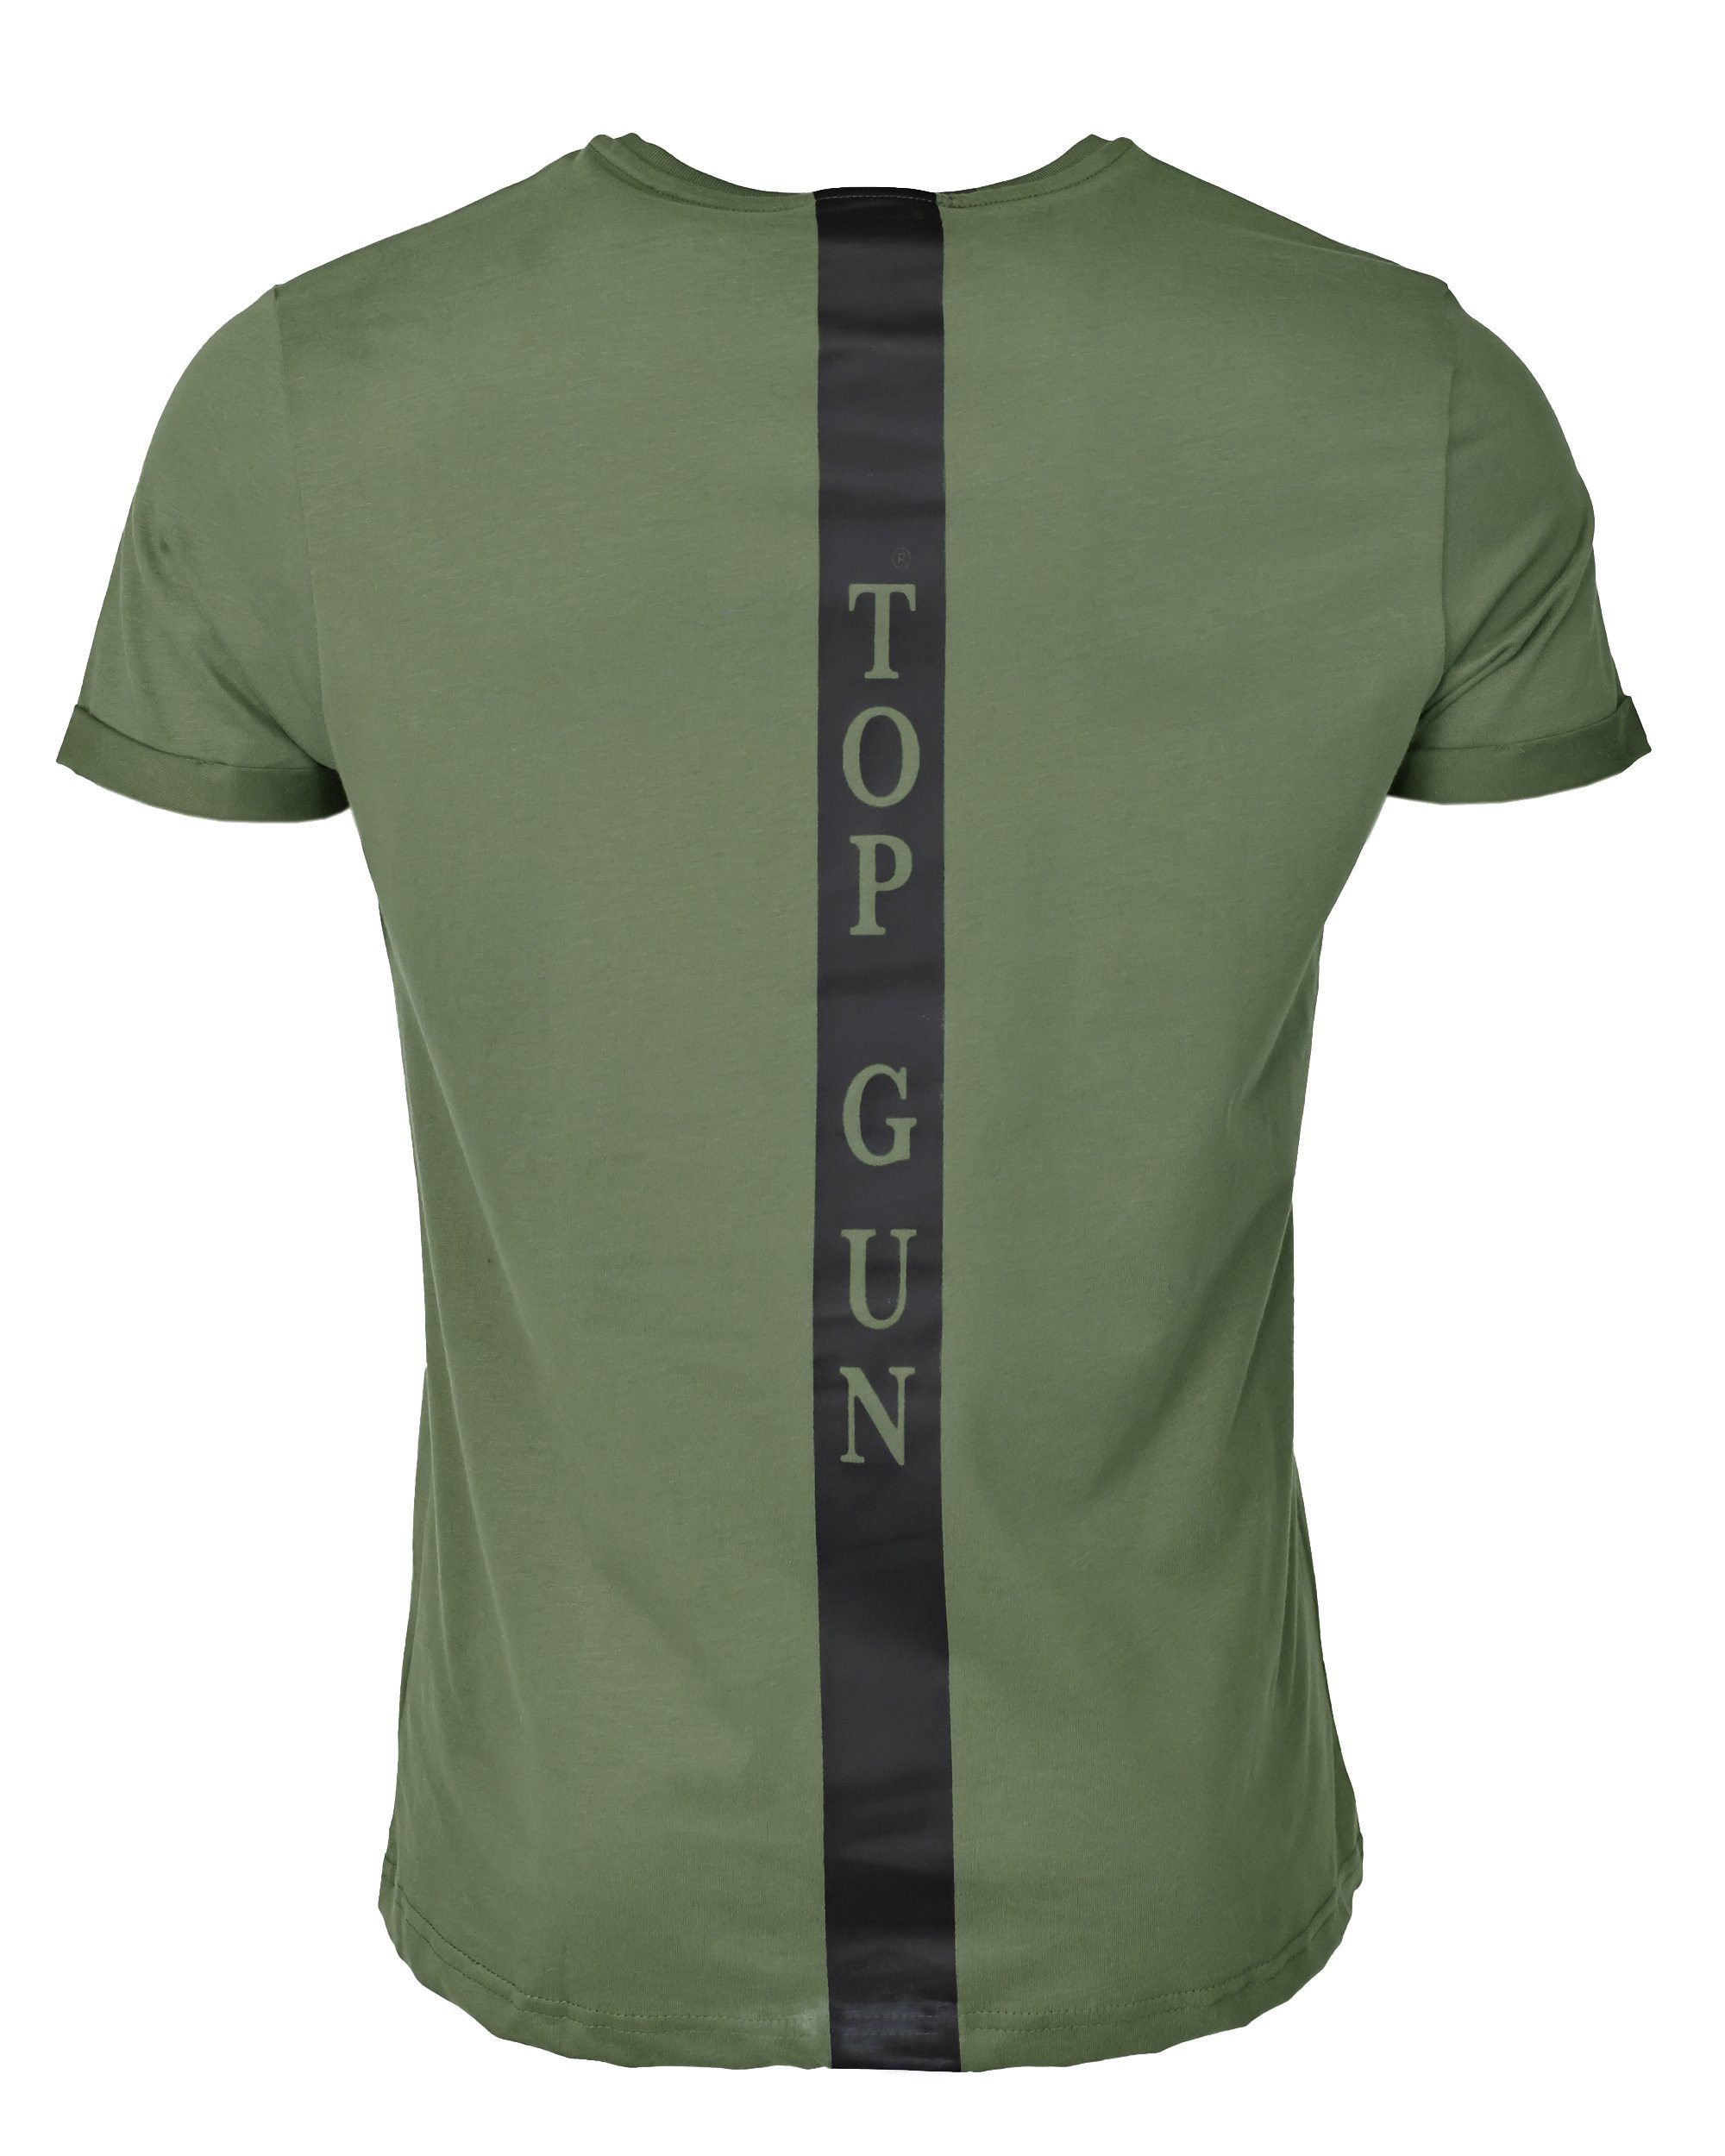 olive GUN T-Shirt TG20213011 TOP